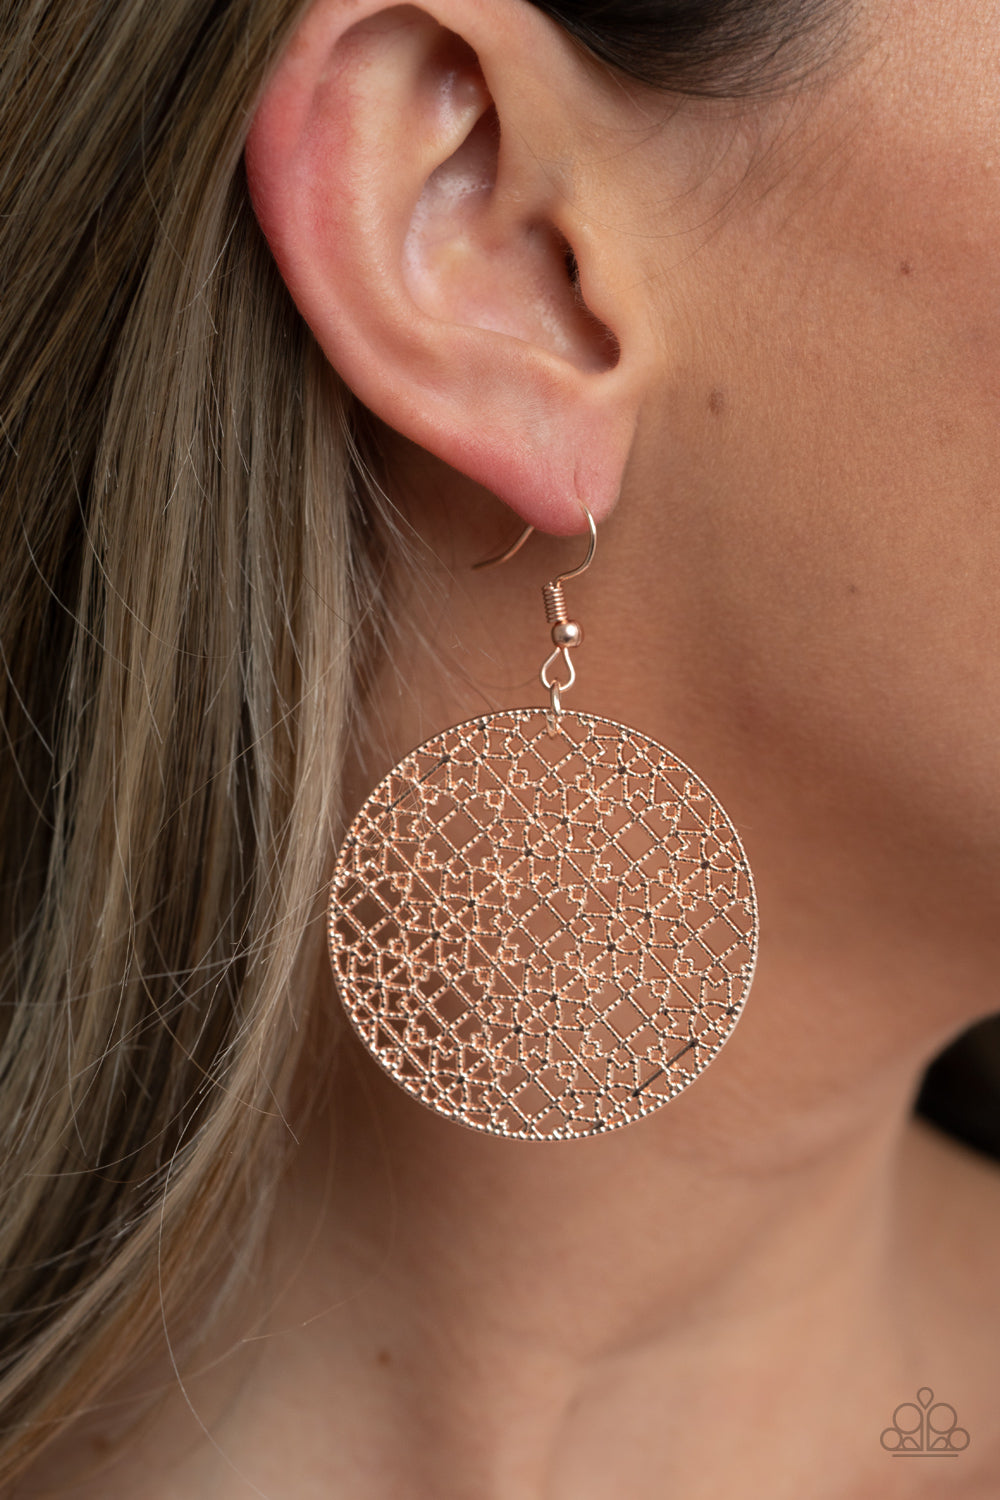 Metallic Mosaic - rose gold - Paparazzi earrings